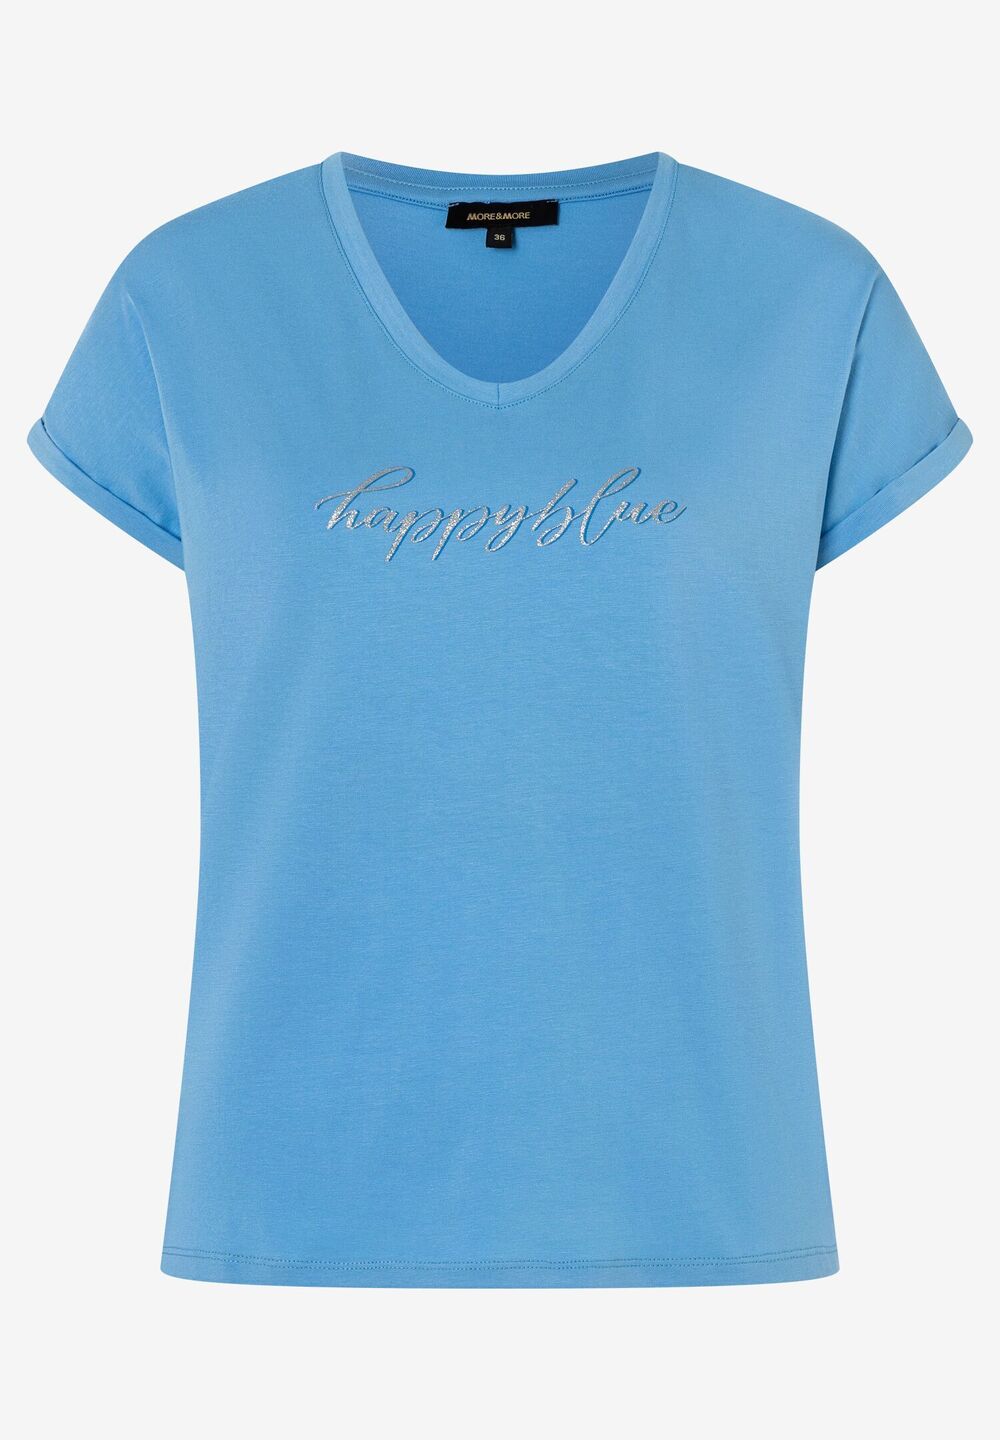 Wording Shirt, happy blue, Sommer-Kollektion, blau Frontansicht